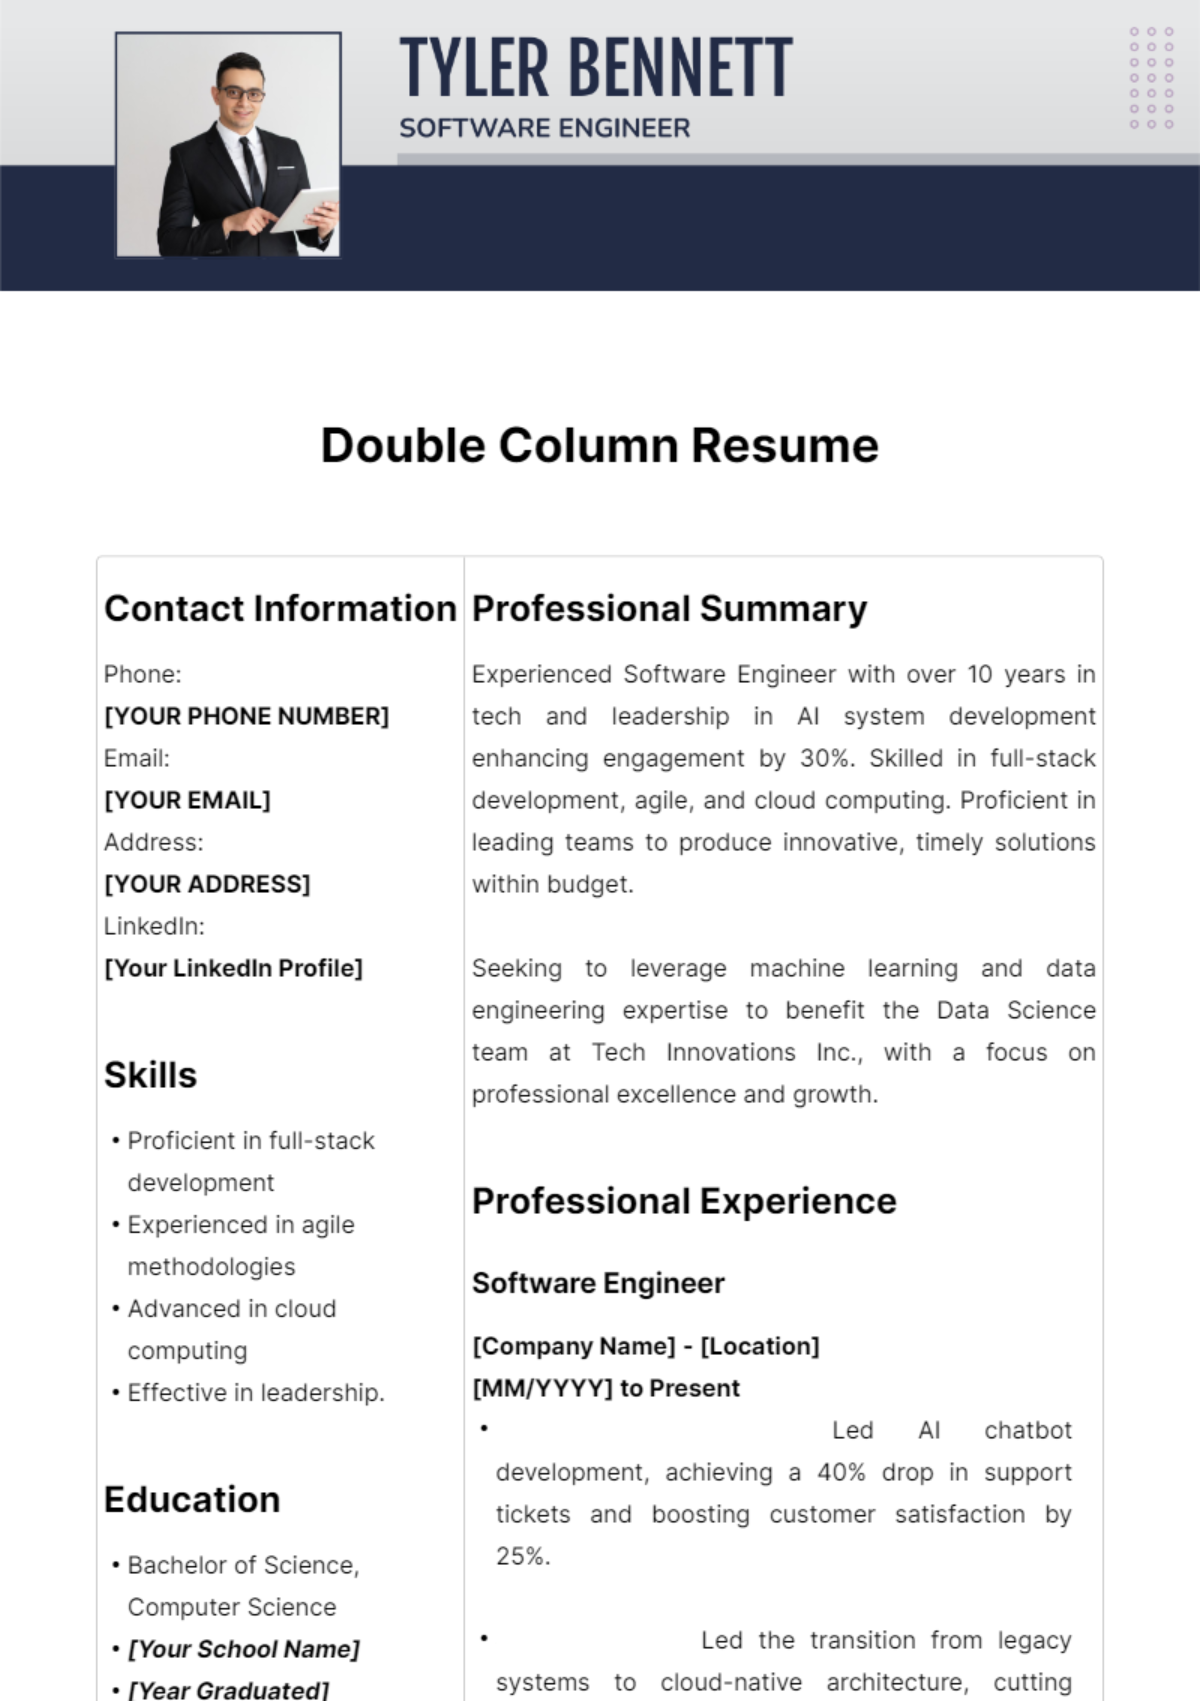 Double Column Resume Template